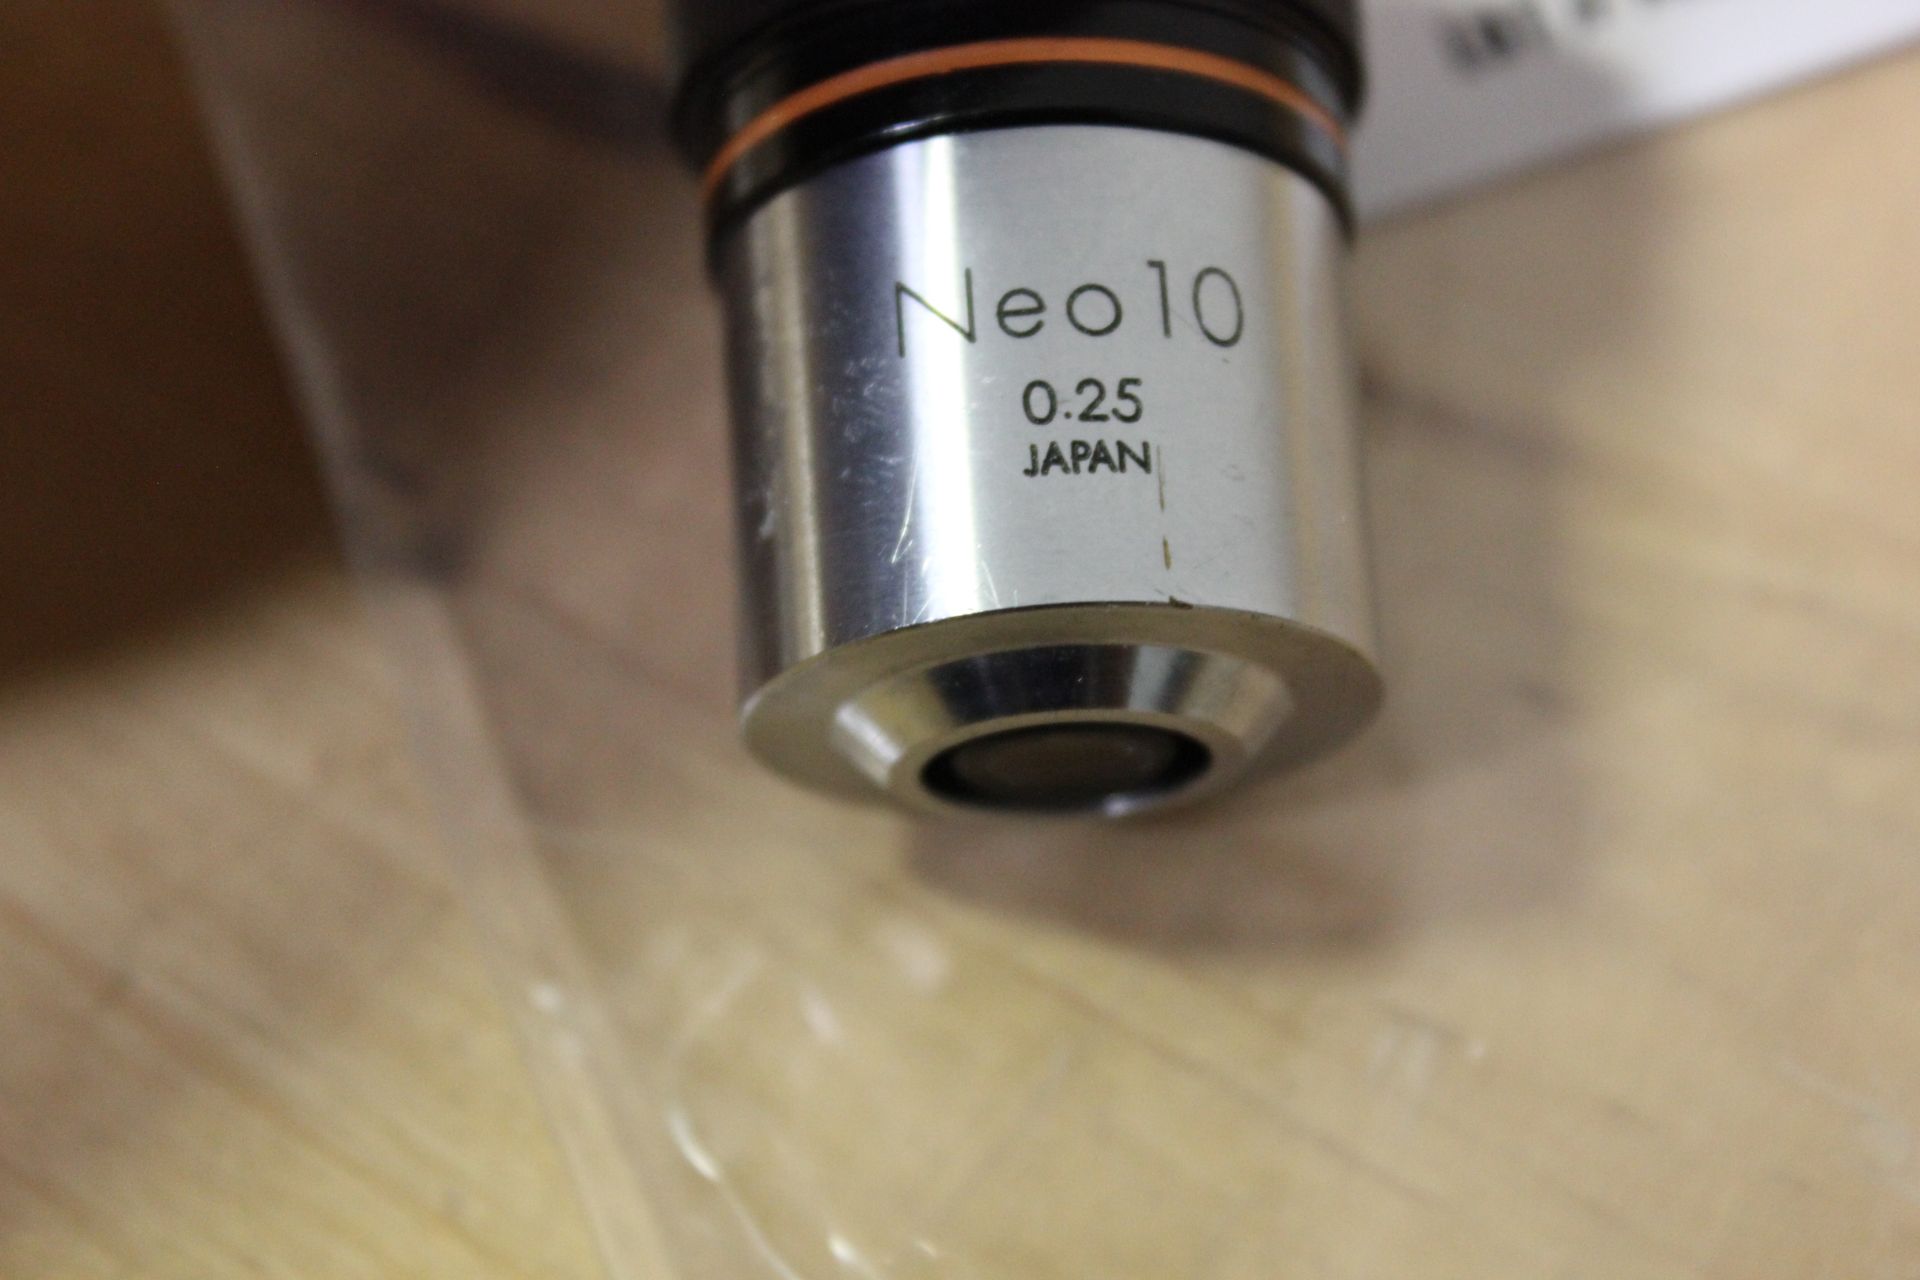 OLYMPUS NEO 10 0.25 MICROSCOPE OBJECTIVE - Image 2 of 5